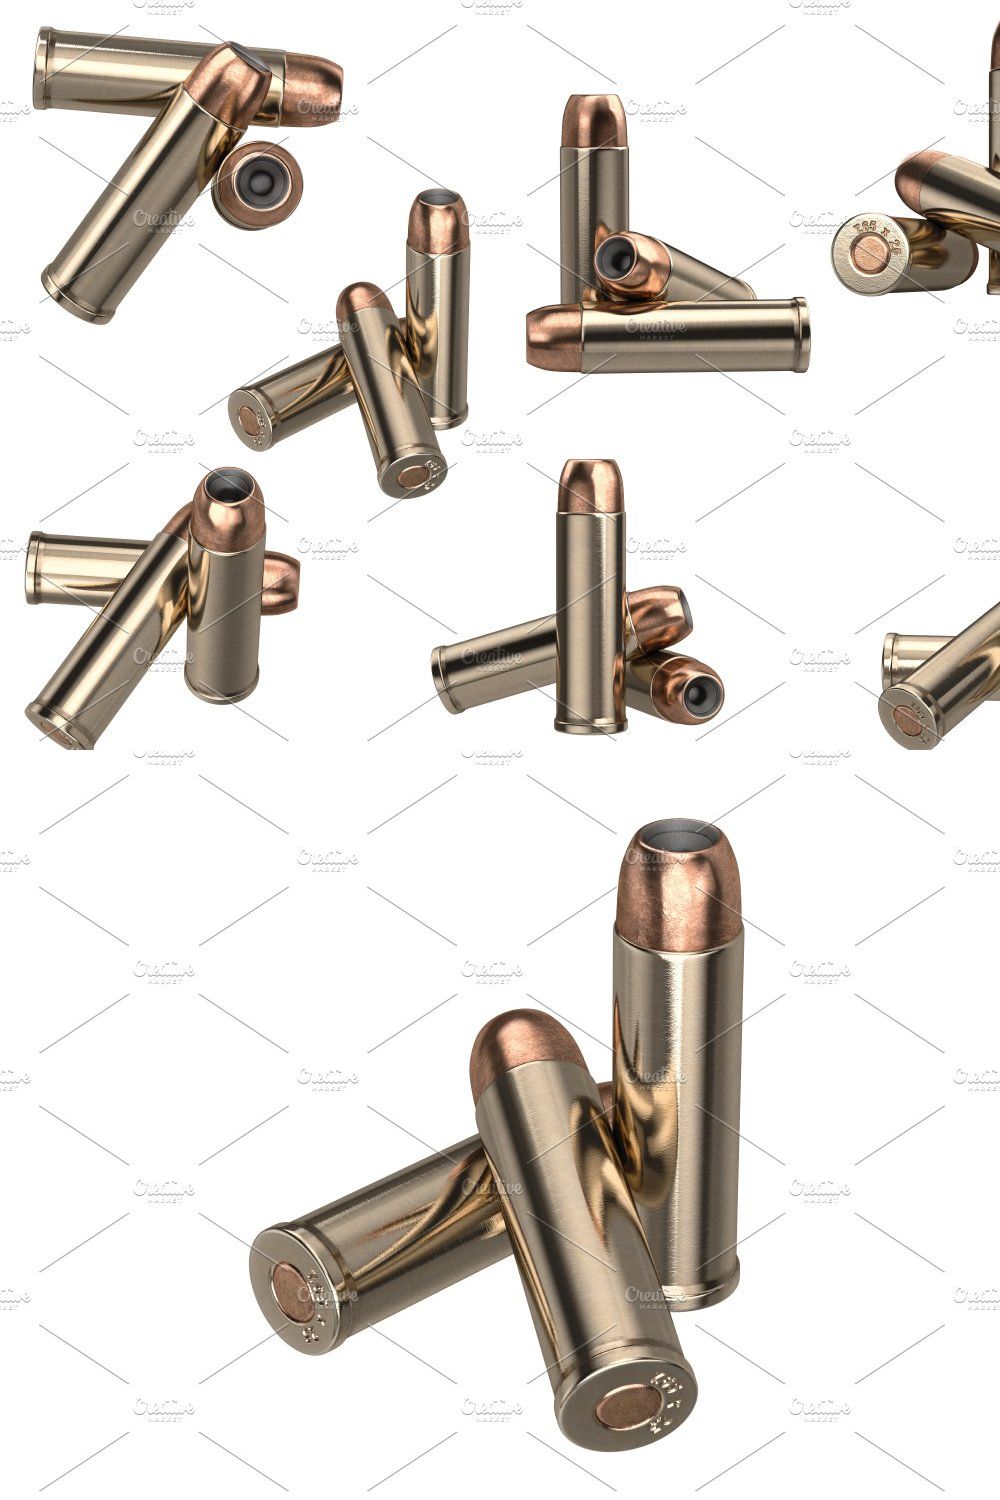 Bullet gun ammunition set pinterest preview image.